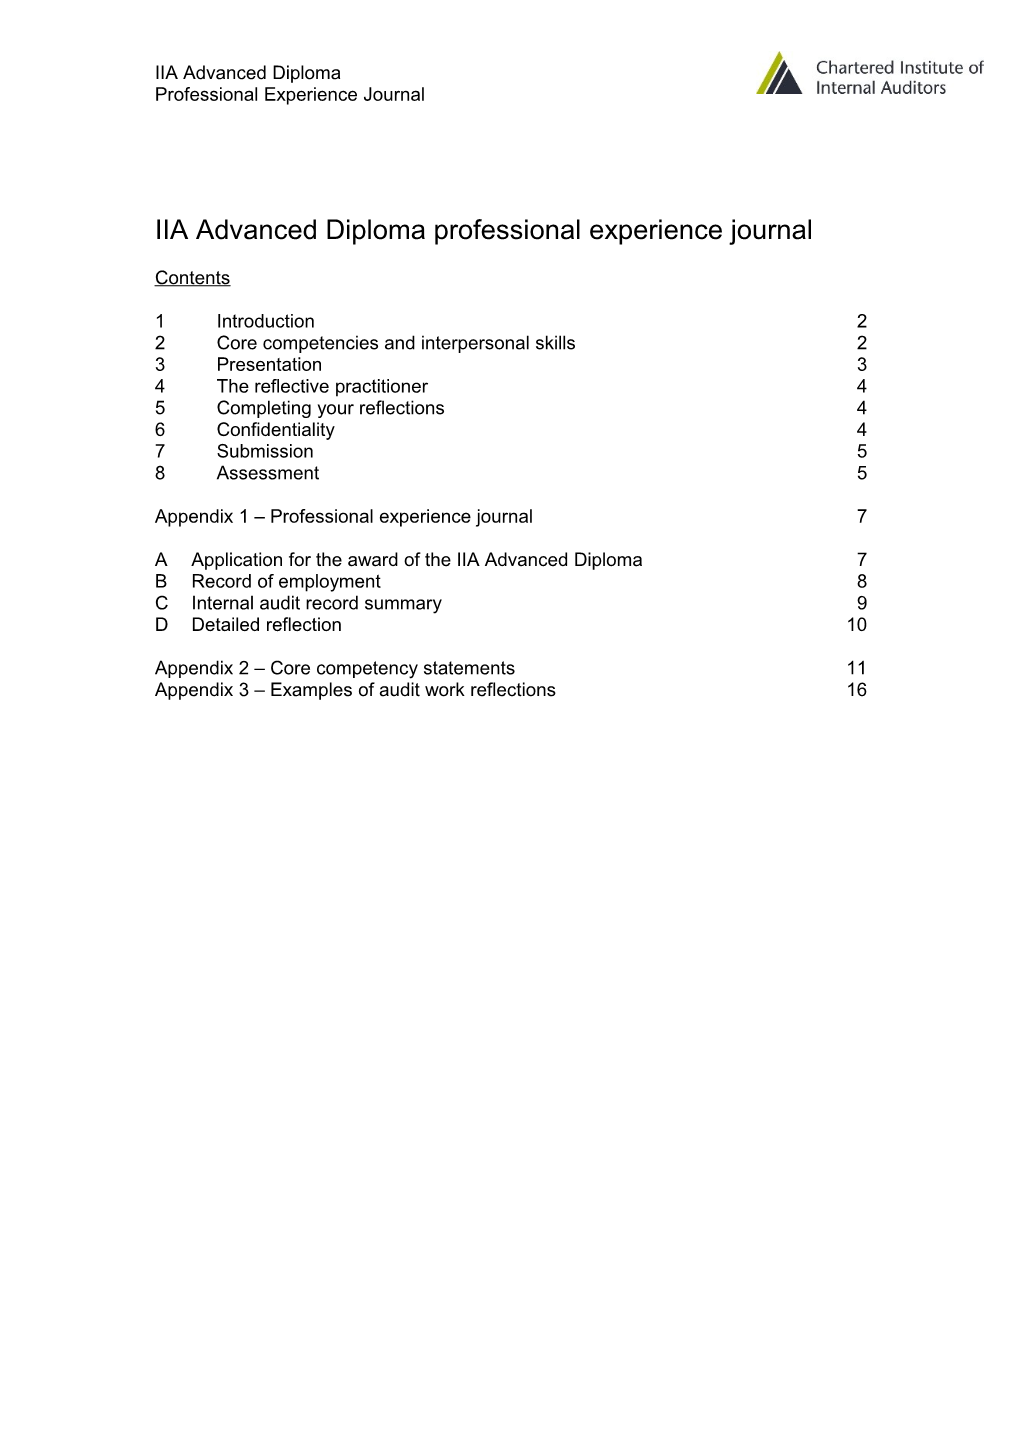 IIA Advanced Diploma - Professional Experience Journal